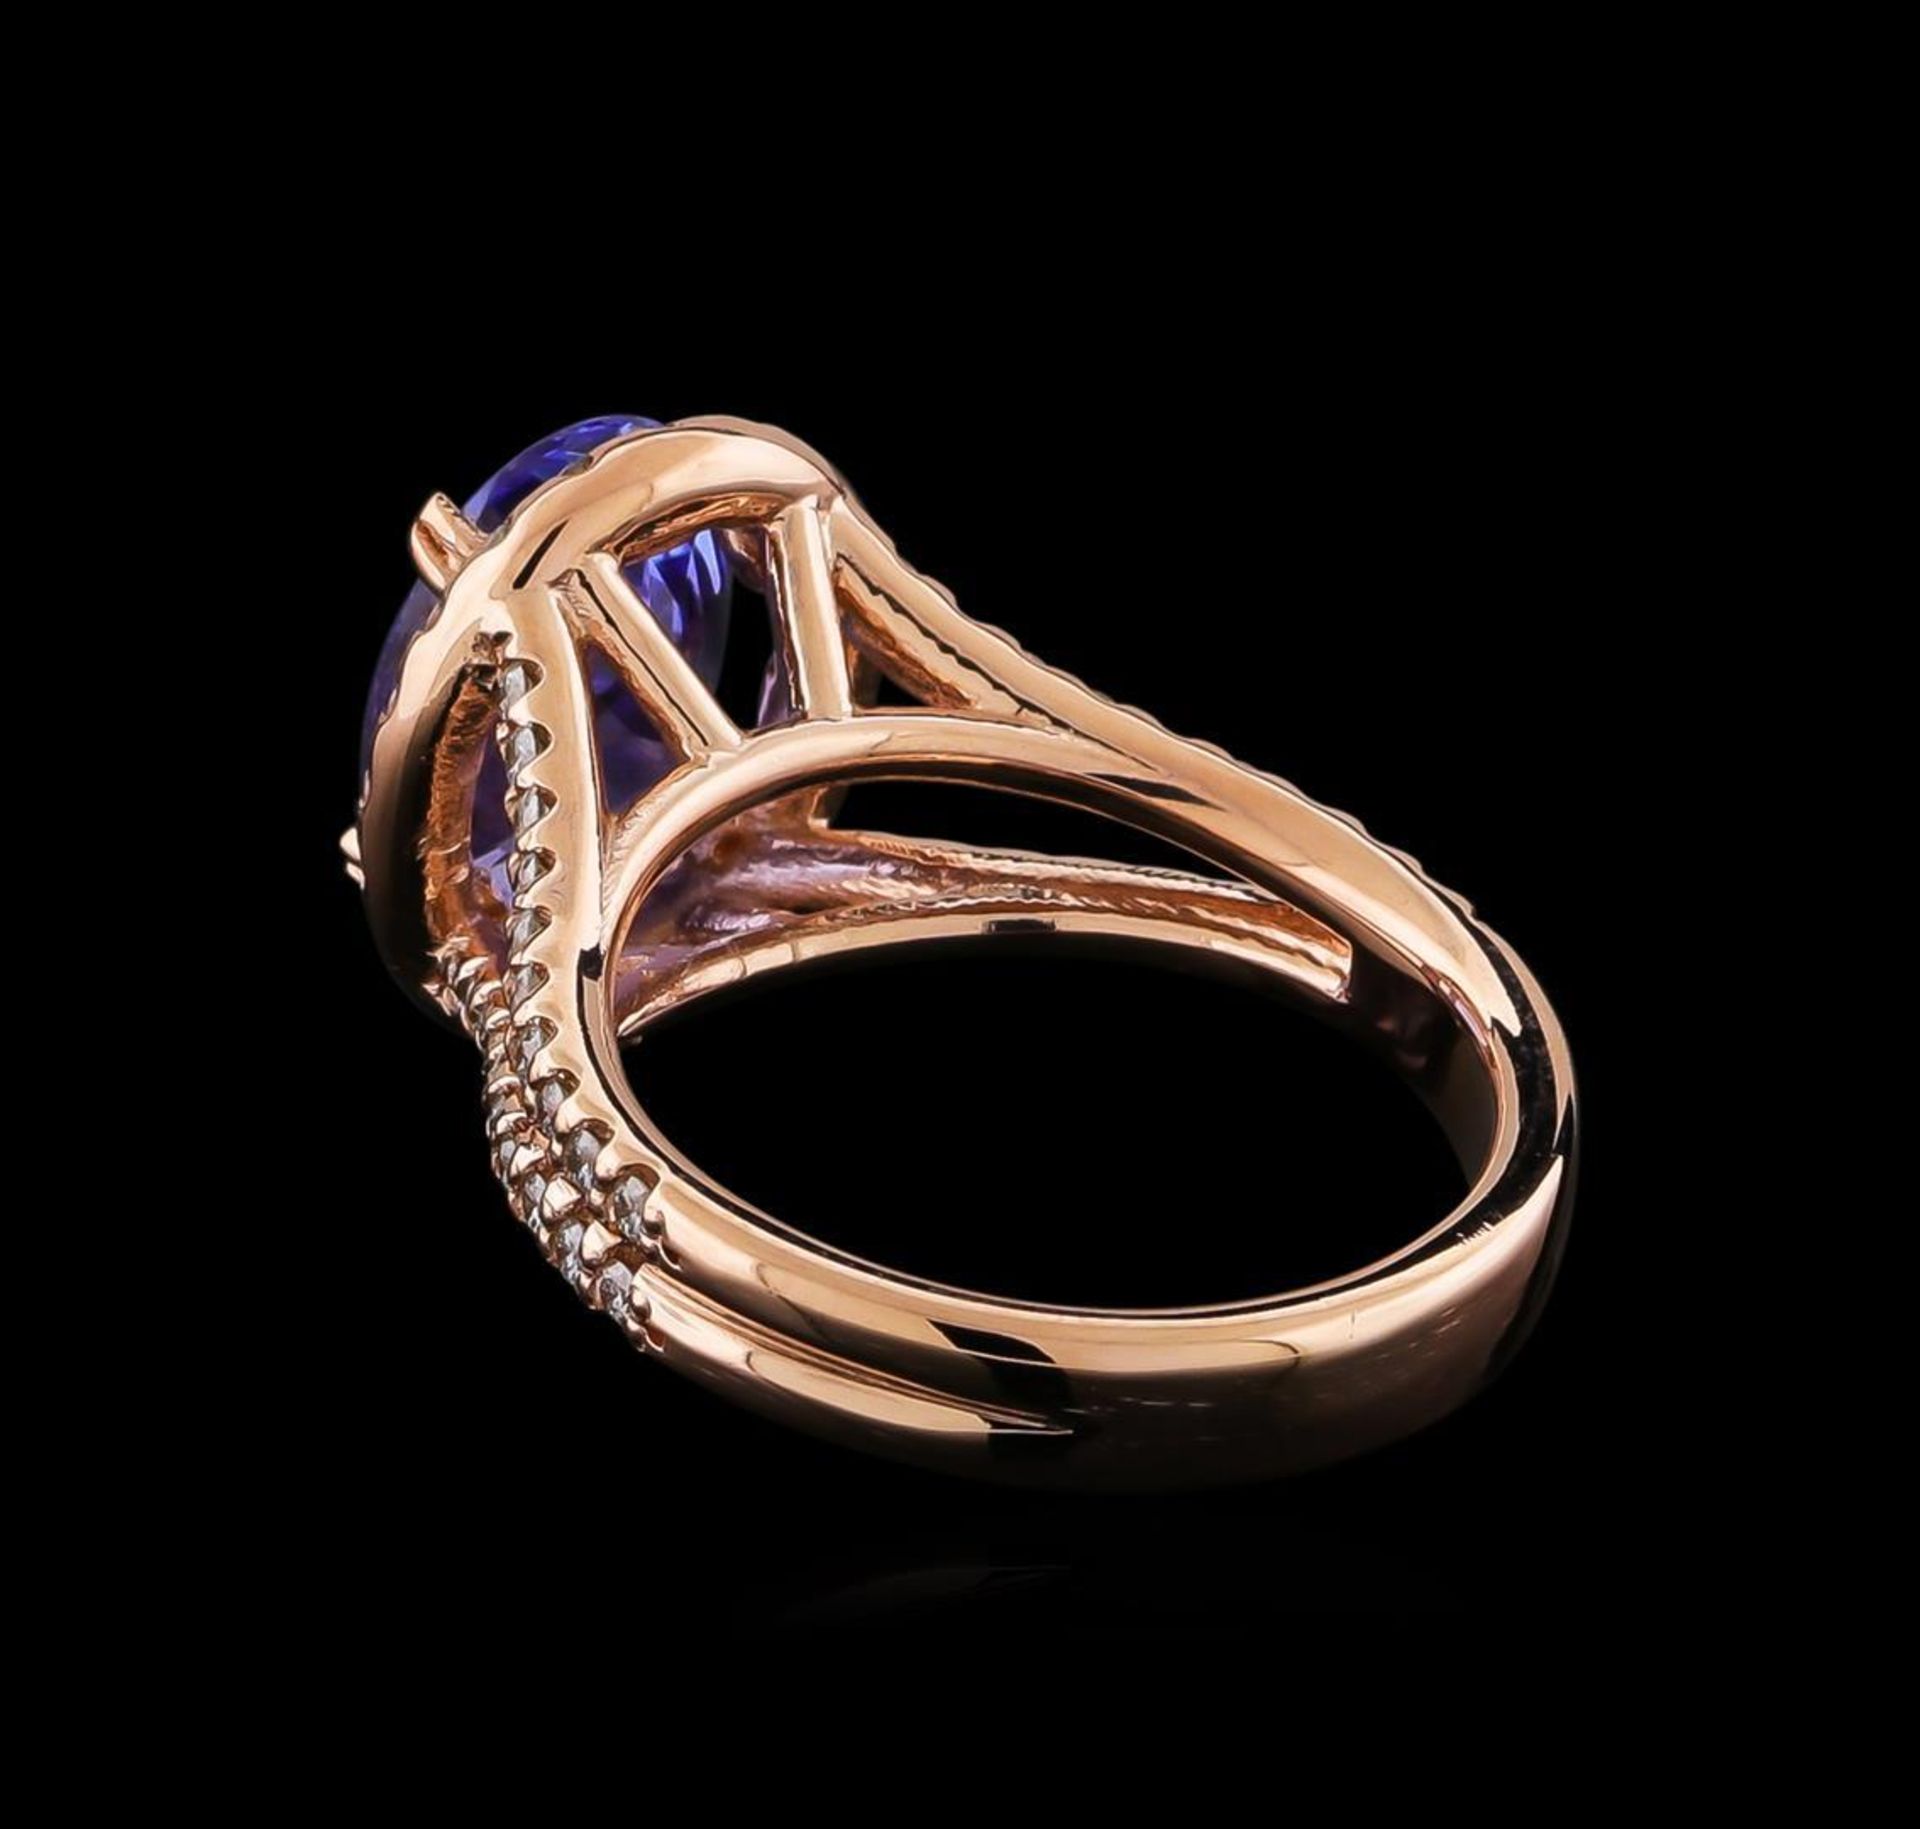 4.01ct Tanzanite and Diamond Ring - 14KT Rose Gold - Image 3 of 5